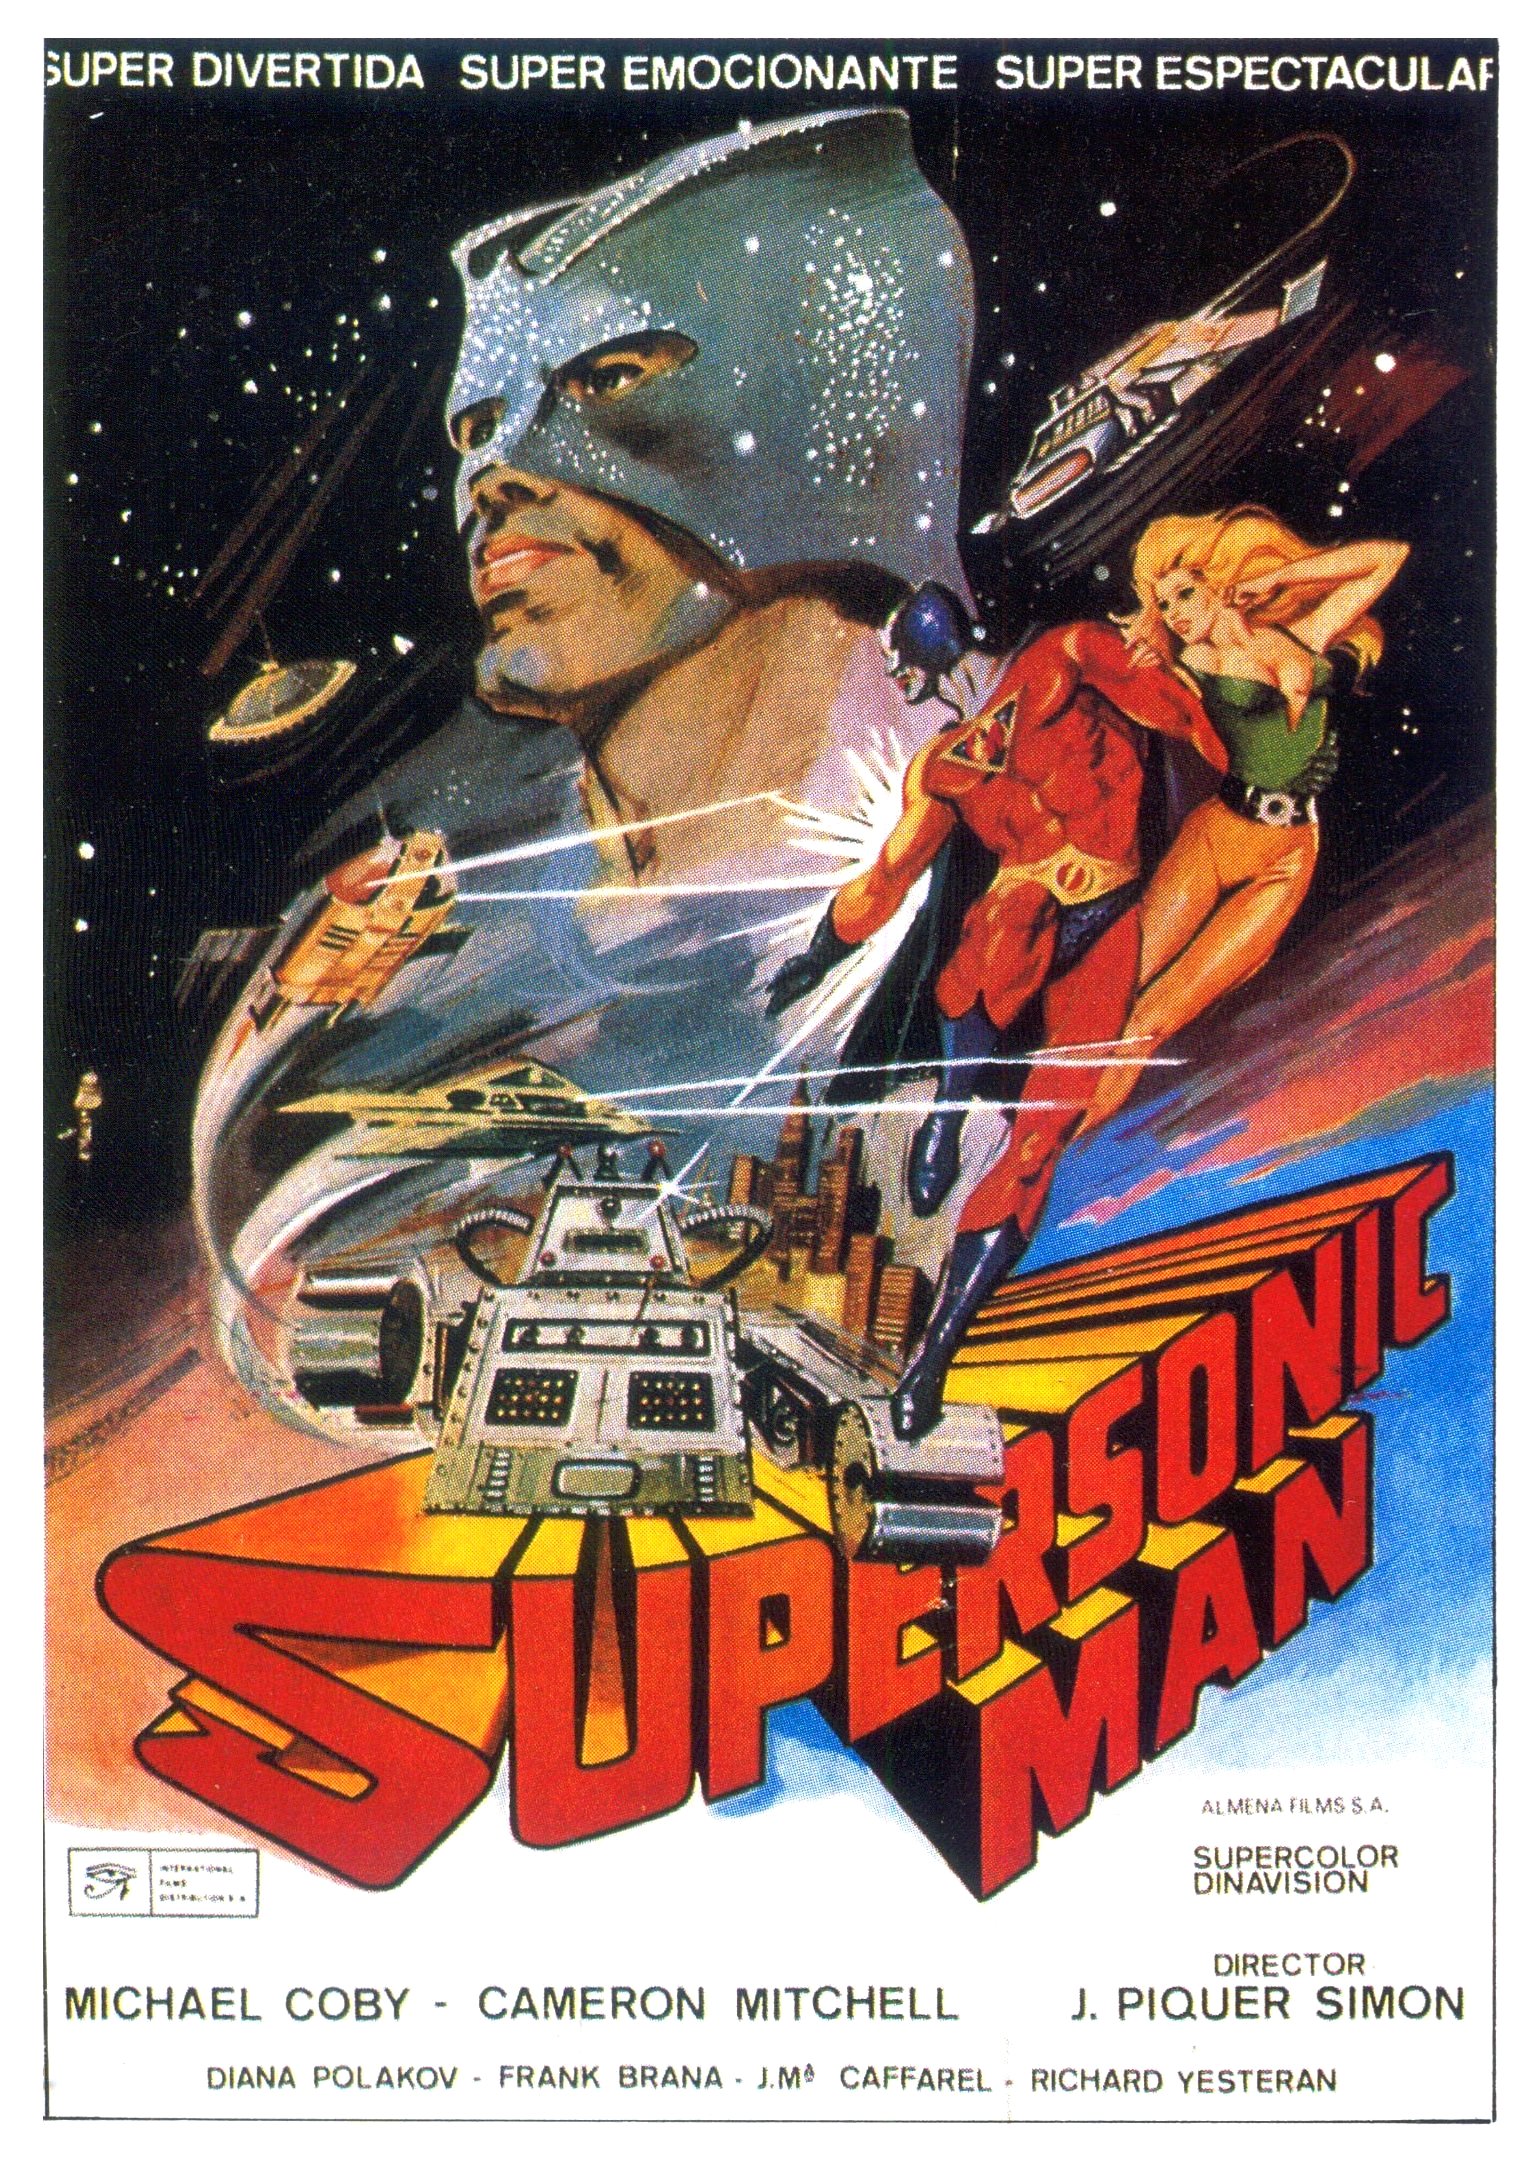 Supersonic Man (1979) Screenshot 5 